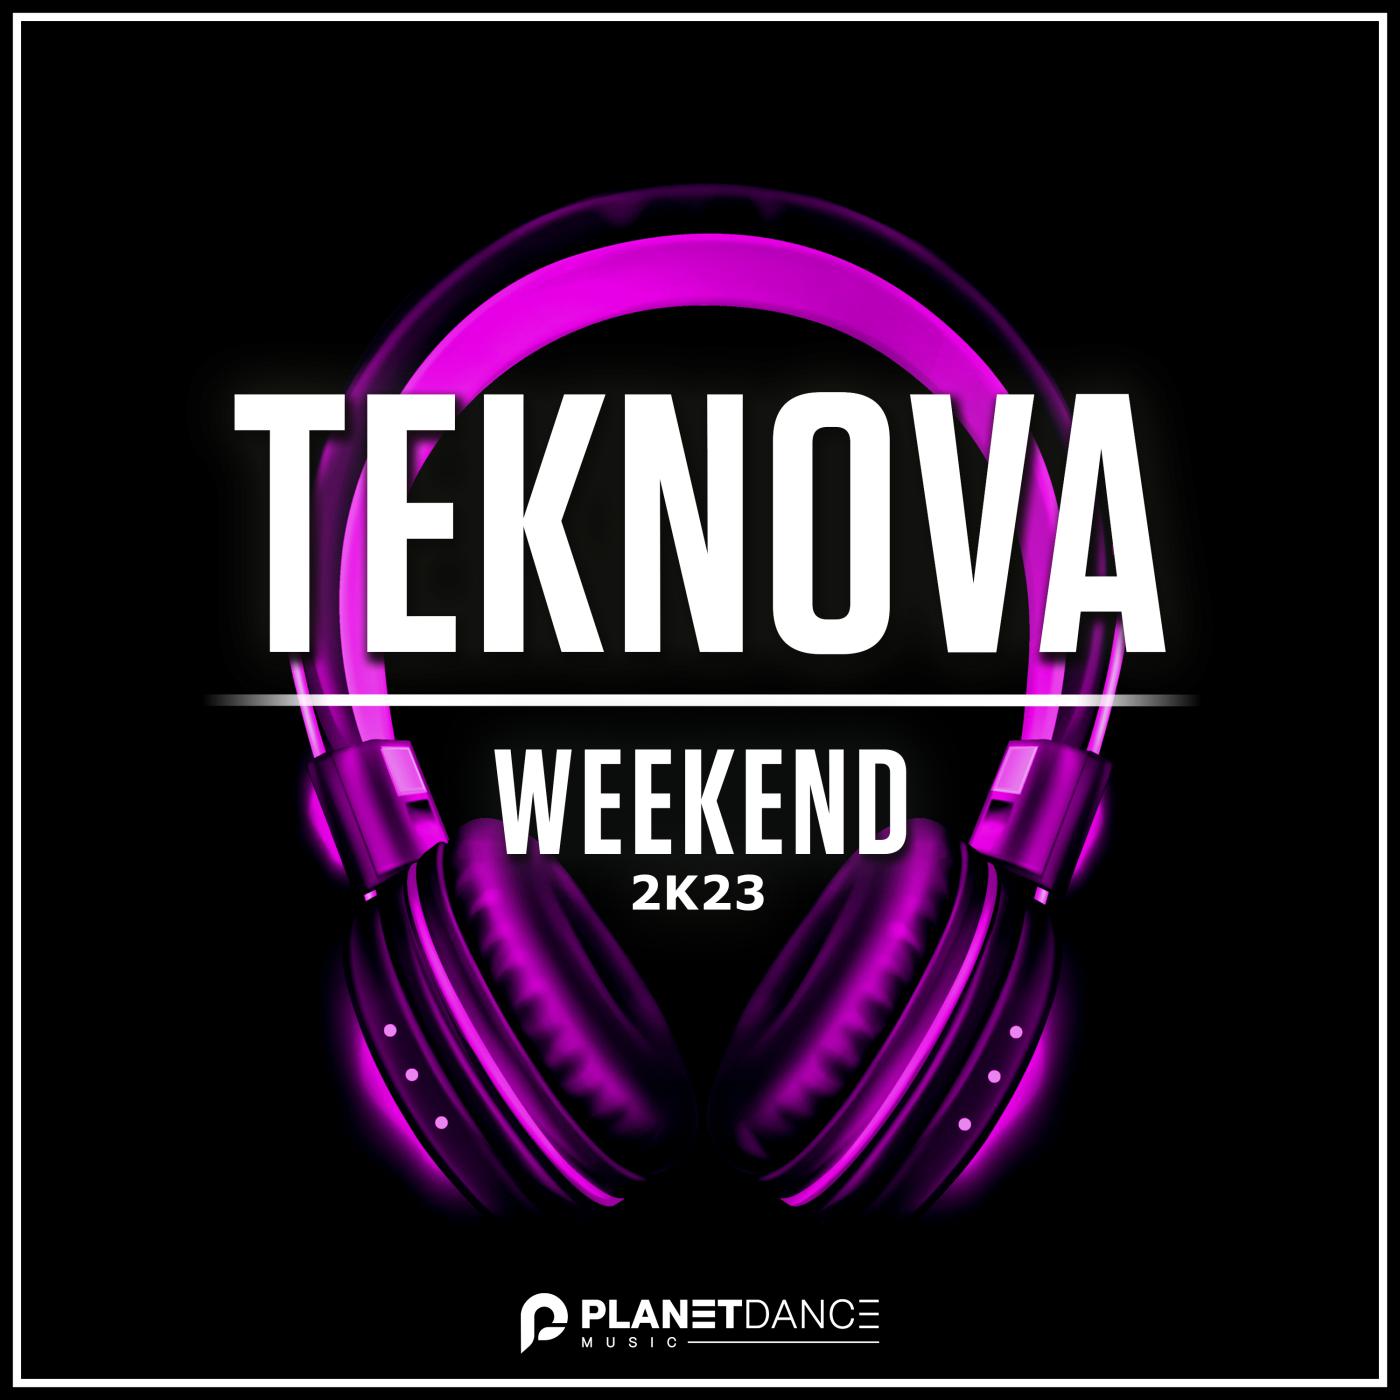 Weekend Stephan f Remix Edit Teknova, Stephan f обложка песни. Музыка weekend Slowed Mix. Уикенд песни слушать